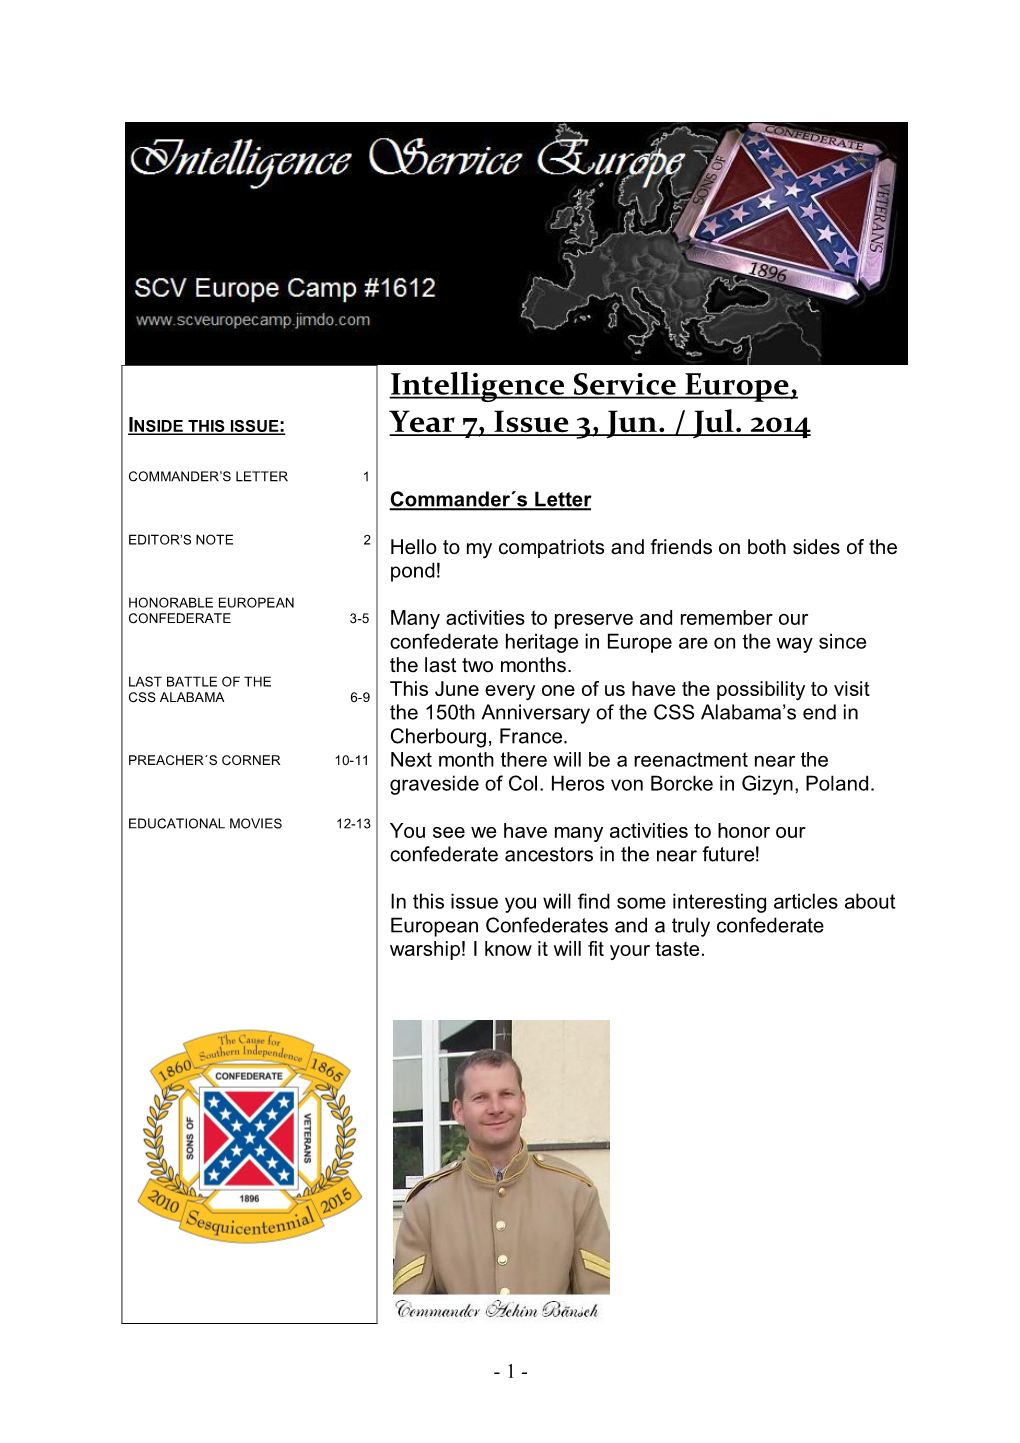 Intelligence Service Europe, Year 7, Issue 3, Jun. / Jul. 2014